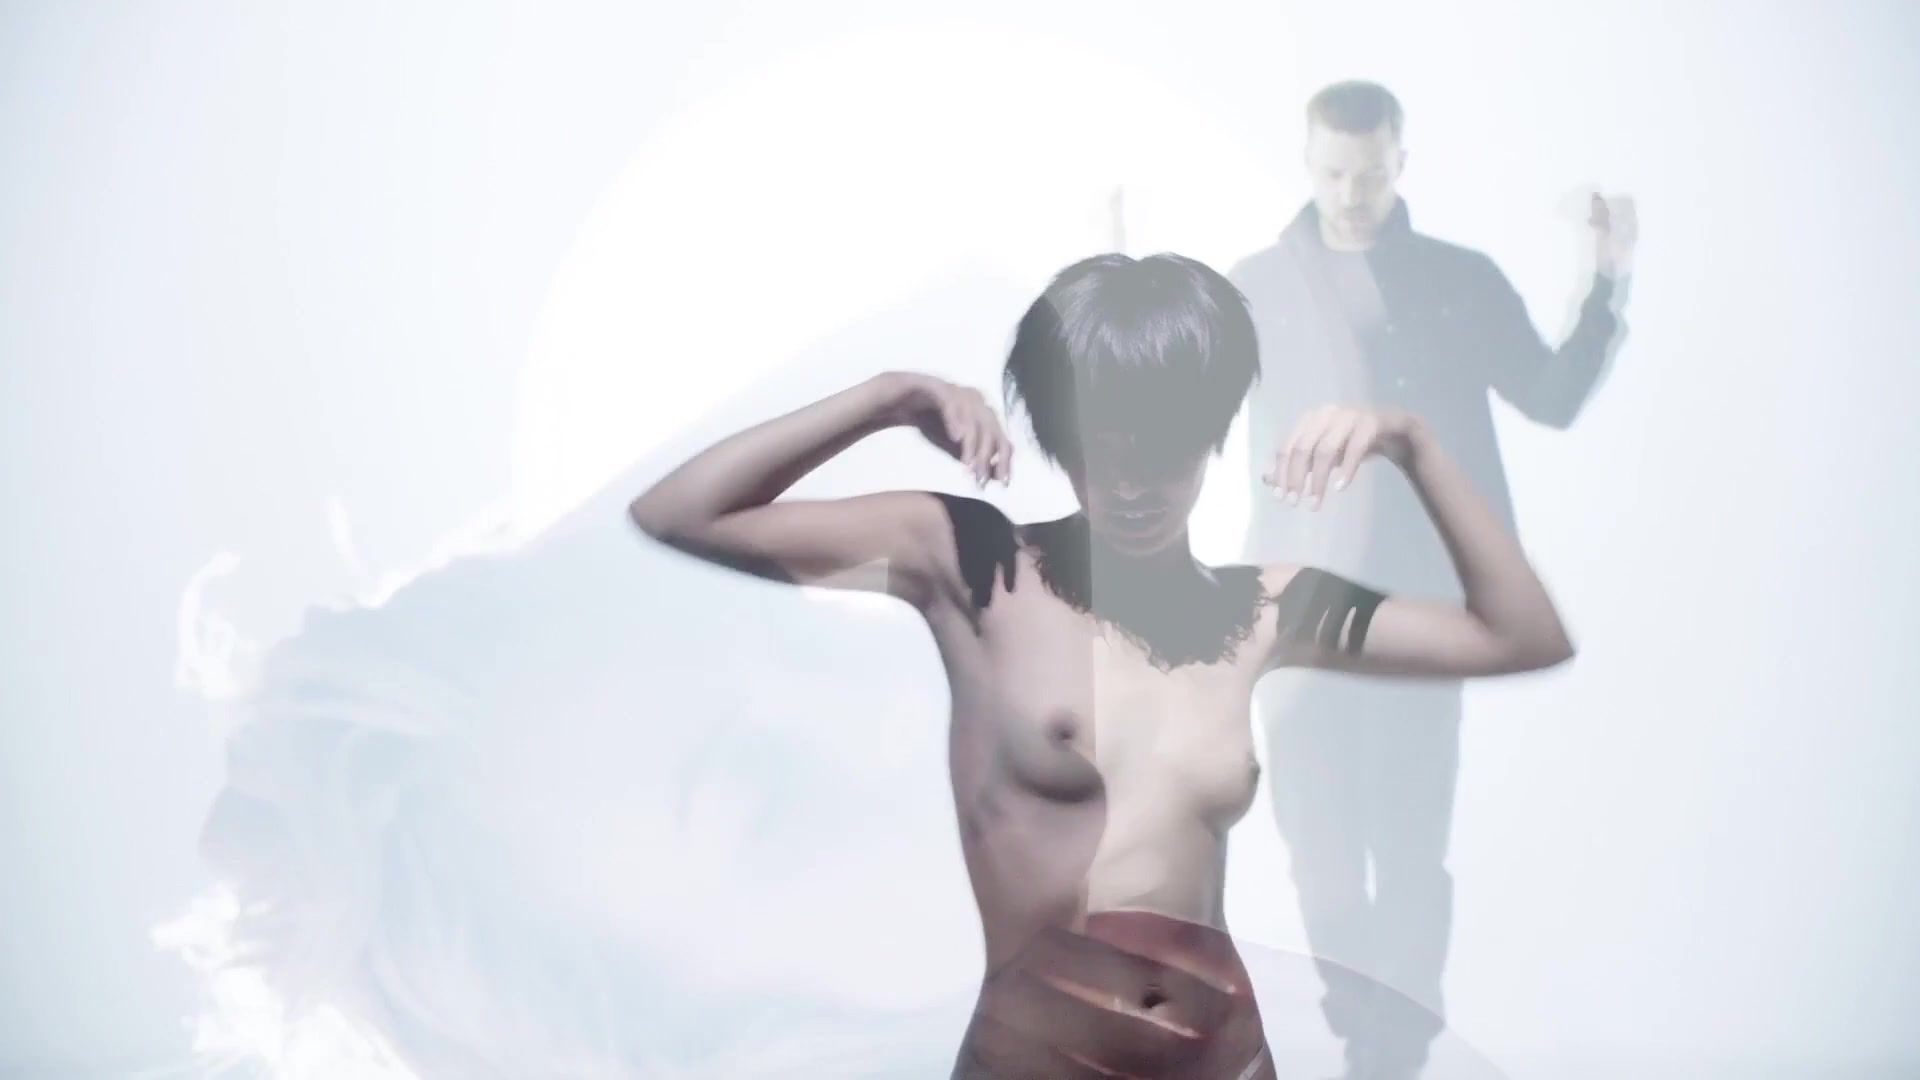 Spa Felicia Porter, Laura Shields Naked - Tunnel Vision (2013, Explicit) - Justin Timberlake Vibrator